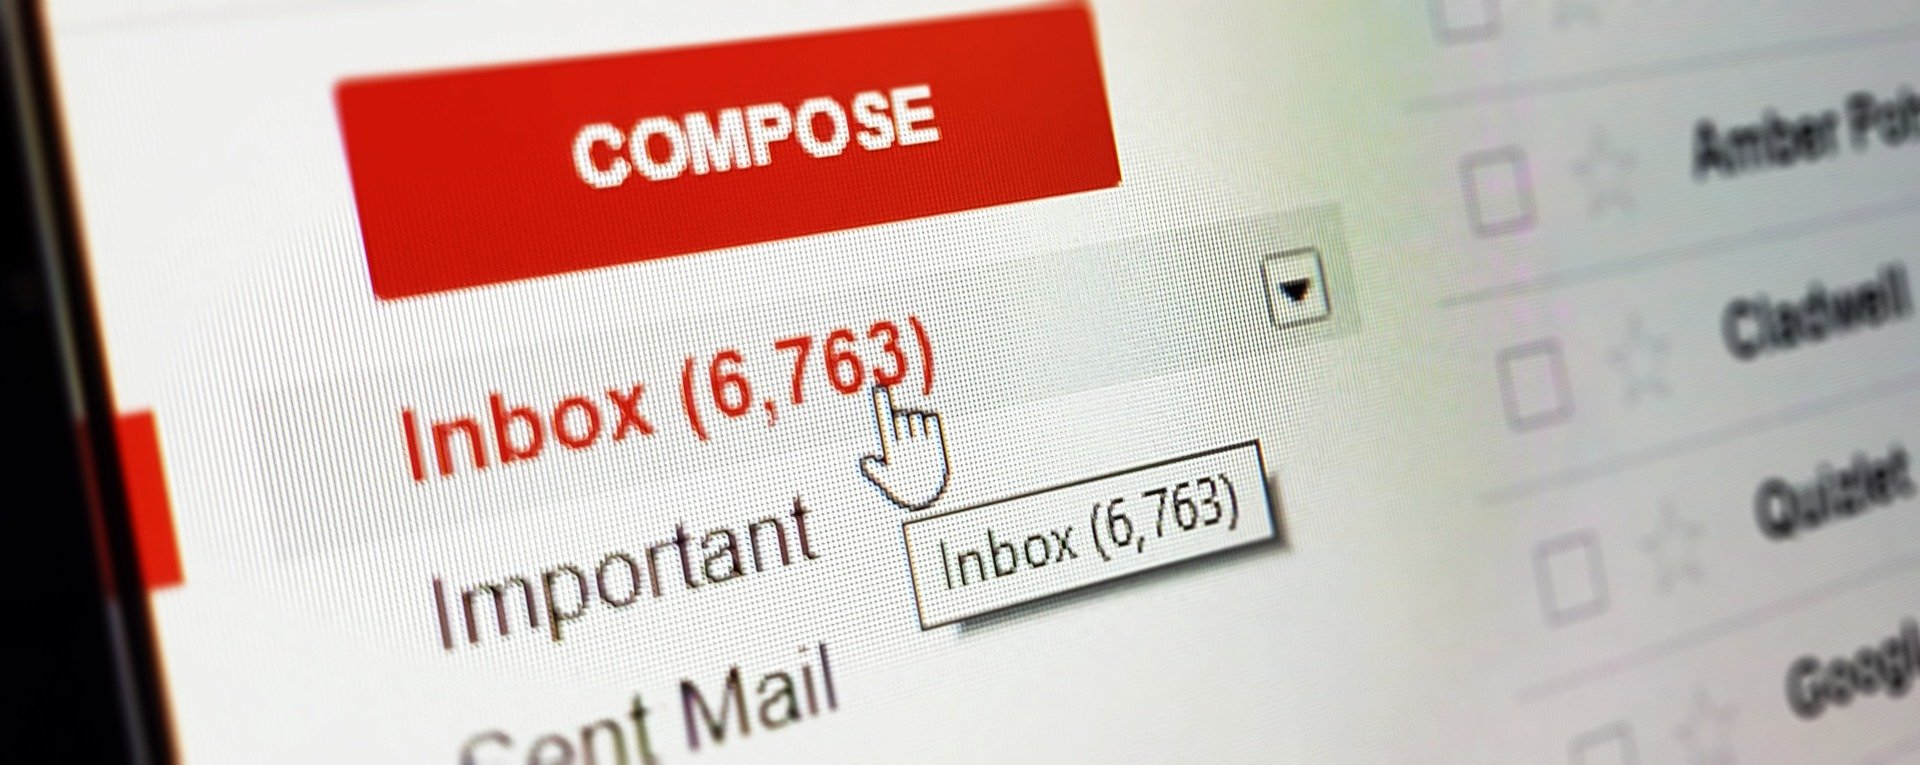 Whitelist Important Emails